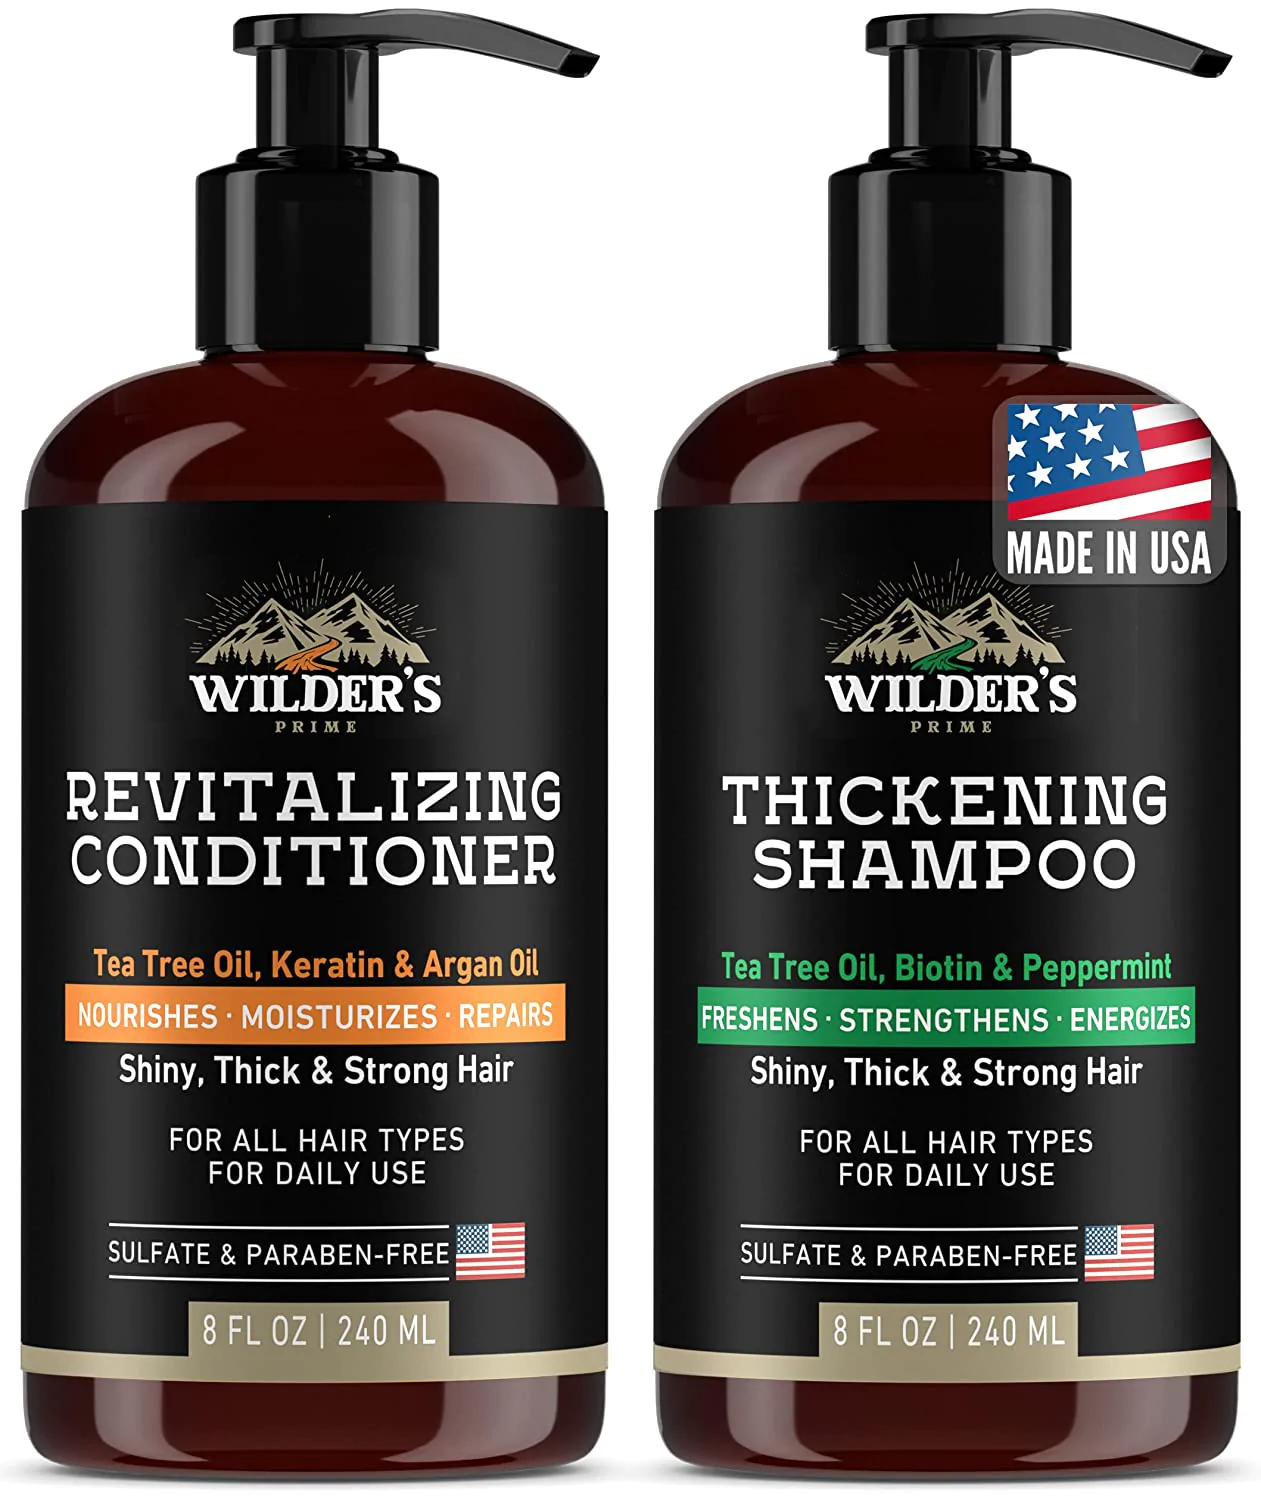 Wilder's Prime Men's Shampoo and Conditioner Set